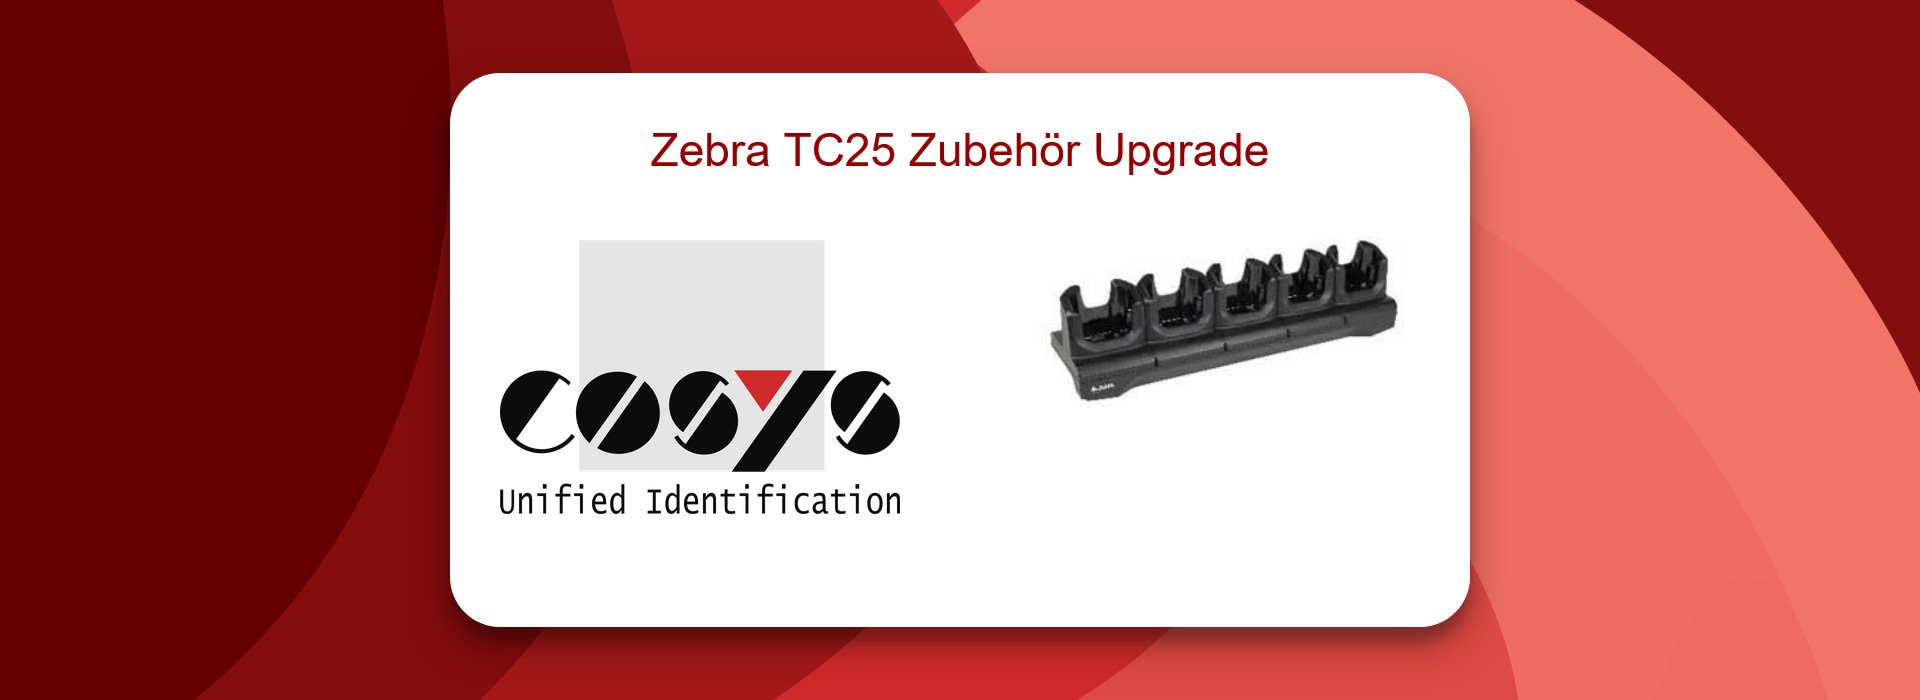 Robustes Zebra TC25 Zubehör Upgrade